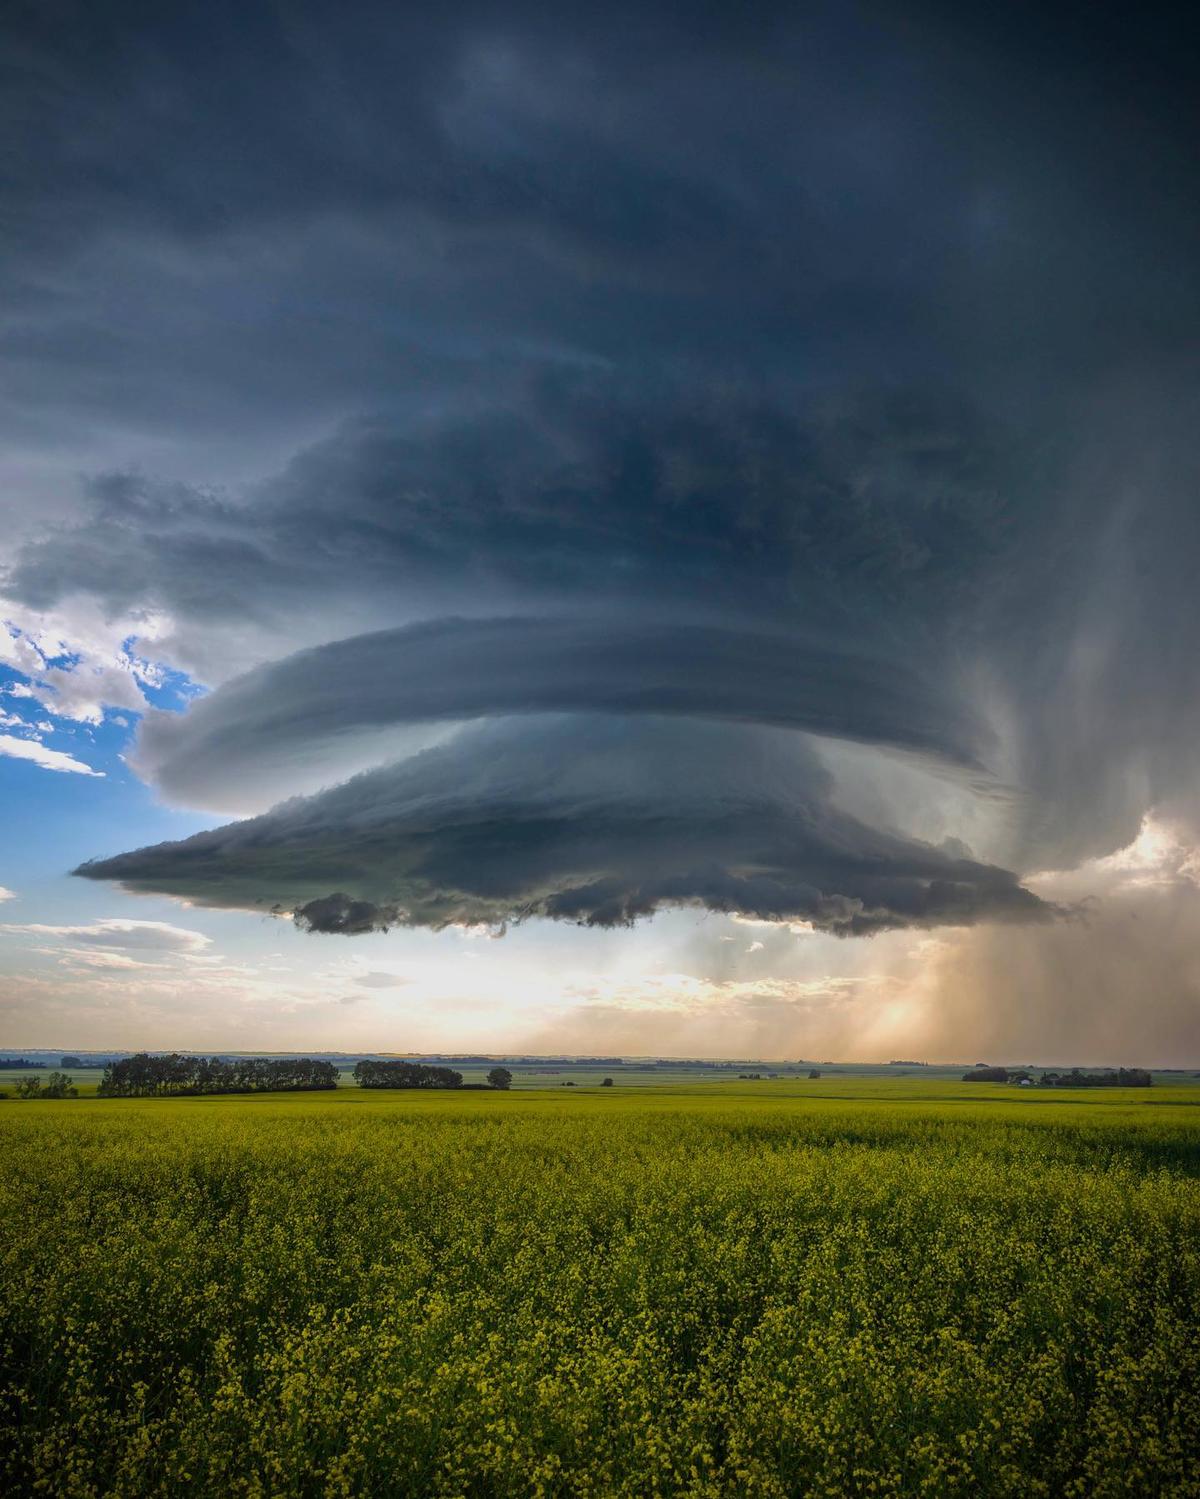 A tornado and storm clouds over central Alberta, Canada. (Courtesy of <a href="https://www.instagram.com/dartanner/">Dar Tanner</a>)